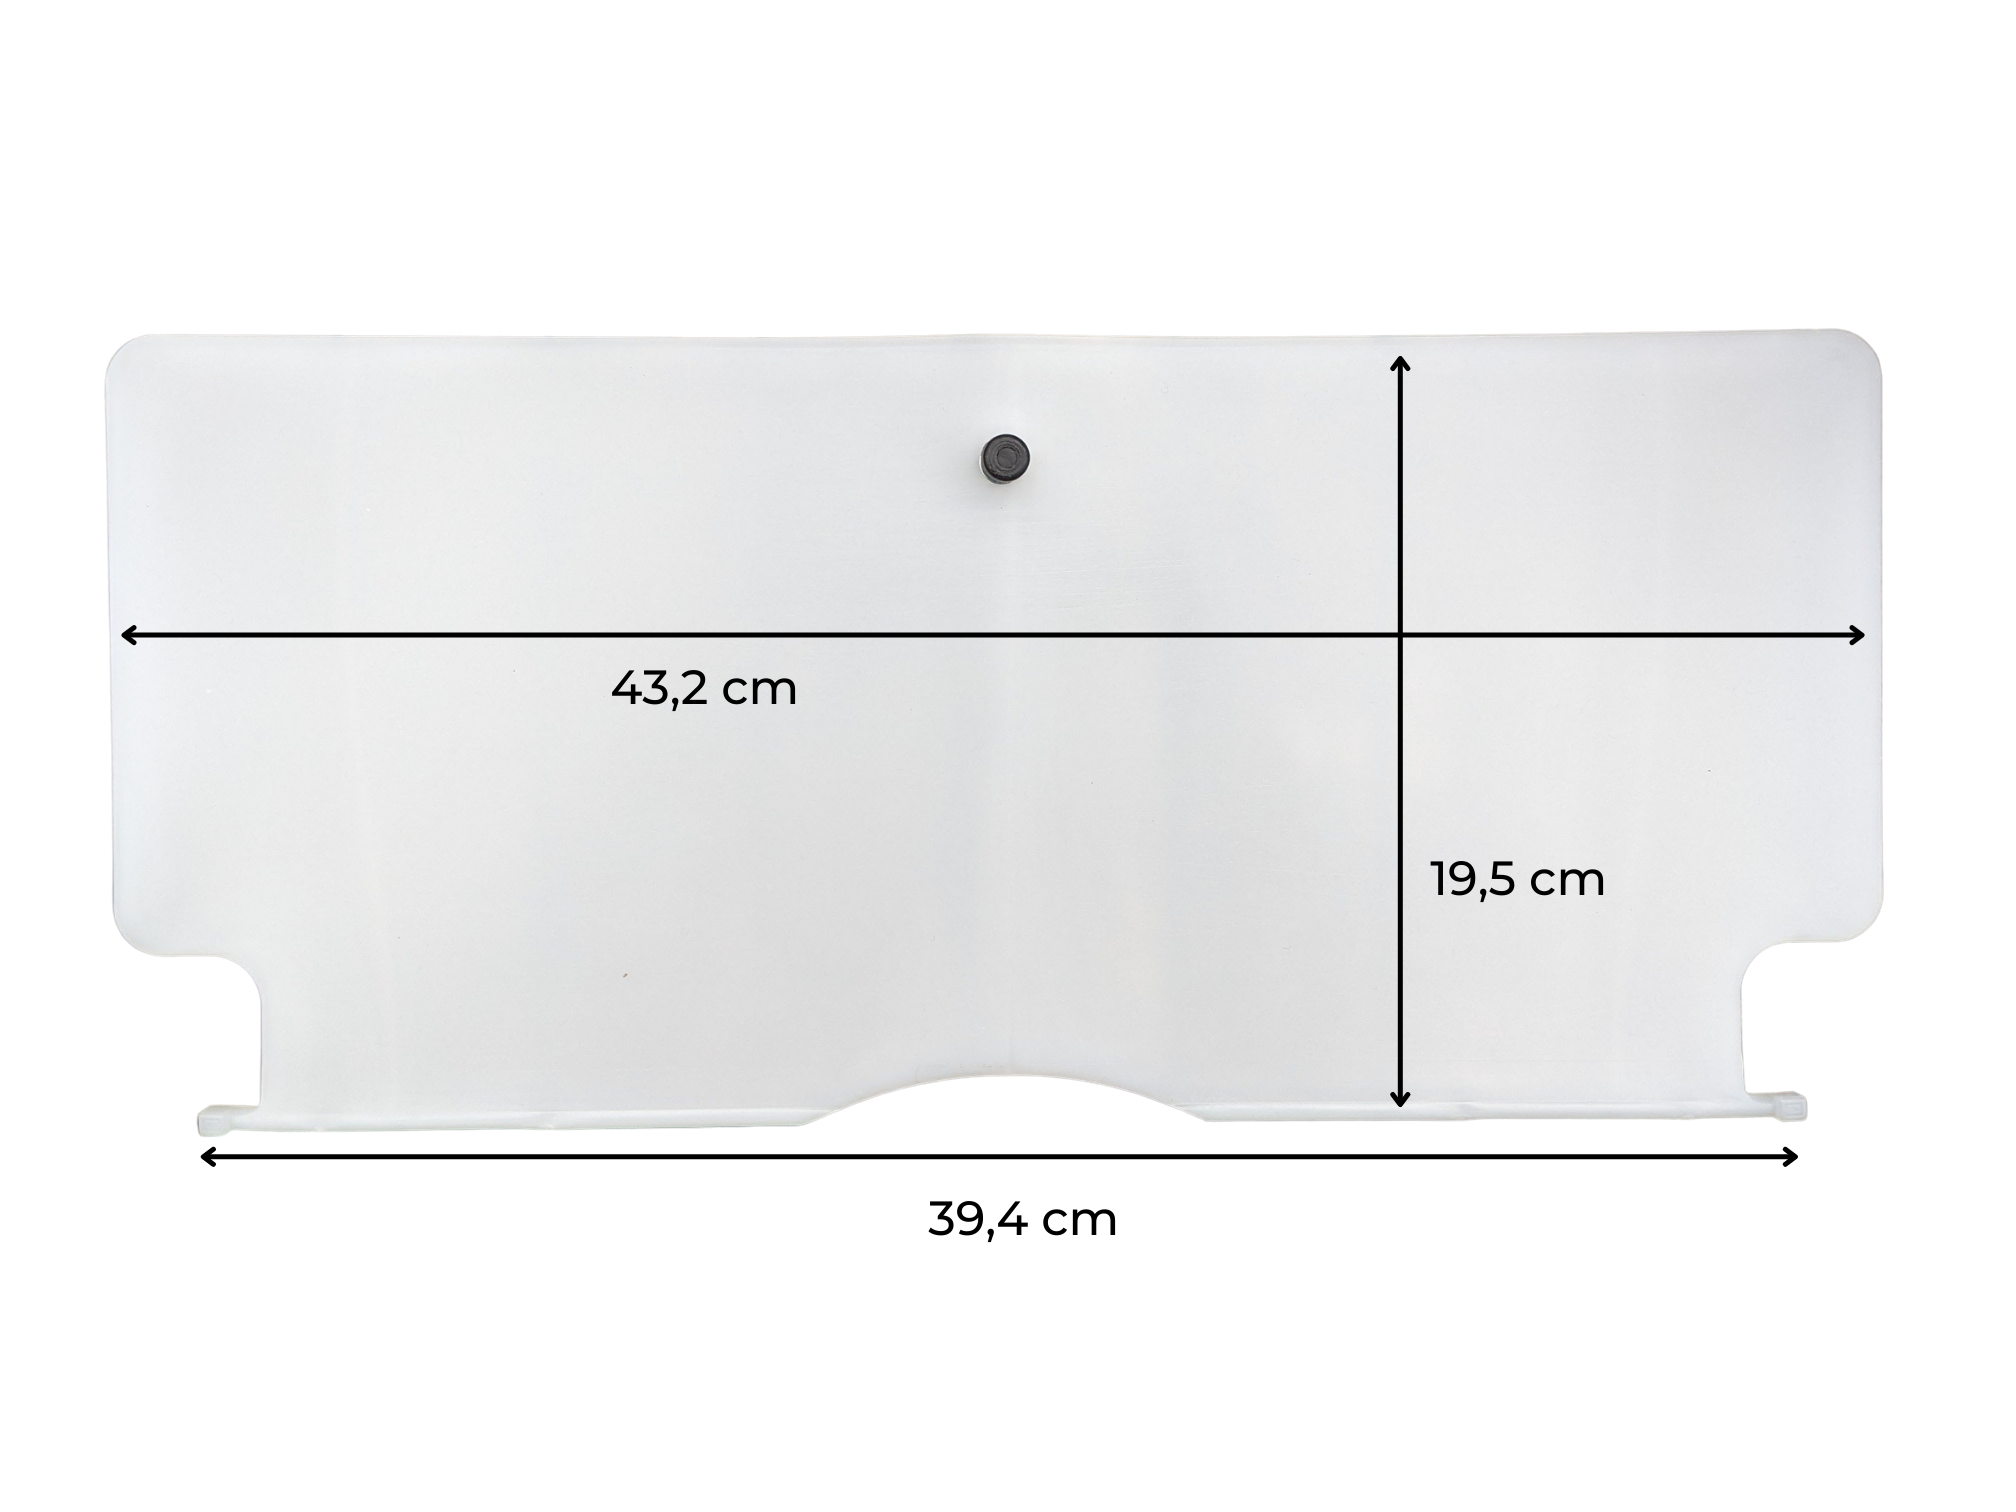 Ballmachine Accessories: Tutor TTP Flap 19,5 x 39,4 / 43,2 cm with Pin